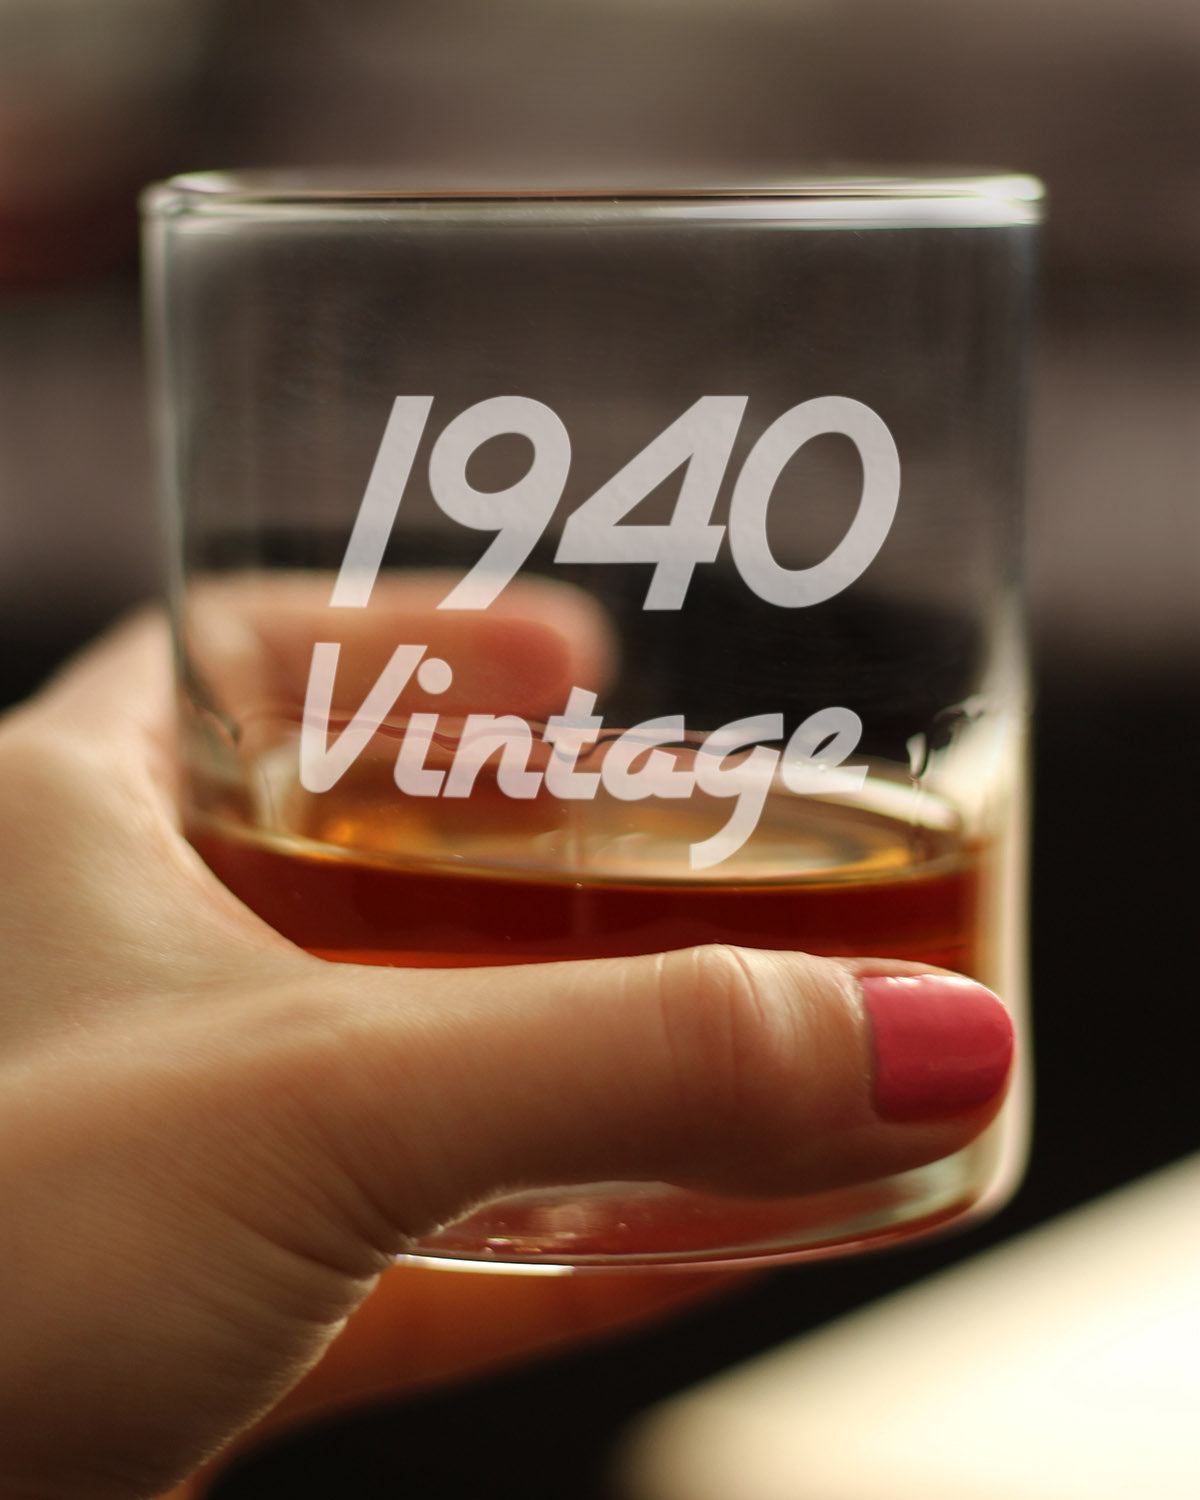 Vintage 1940 - Fun 84th Birthday Whiskey Rocks Glass Gifts for Men &amp; Women Turning 84 - Retro Whisky Drinking Tumbler